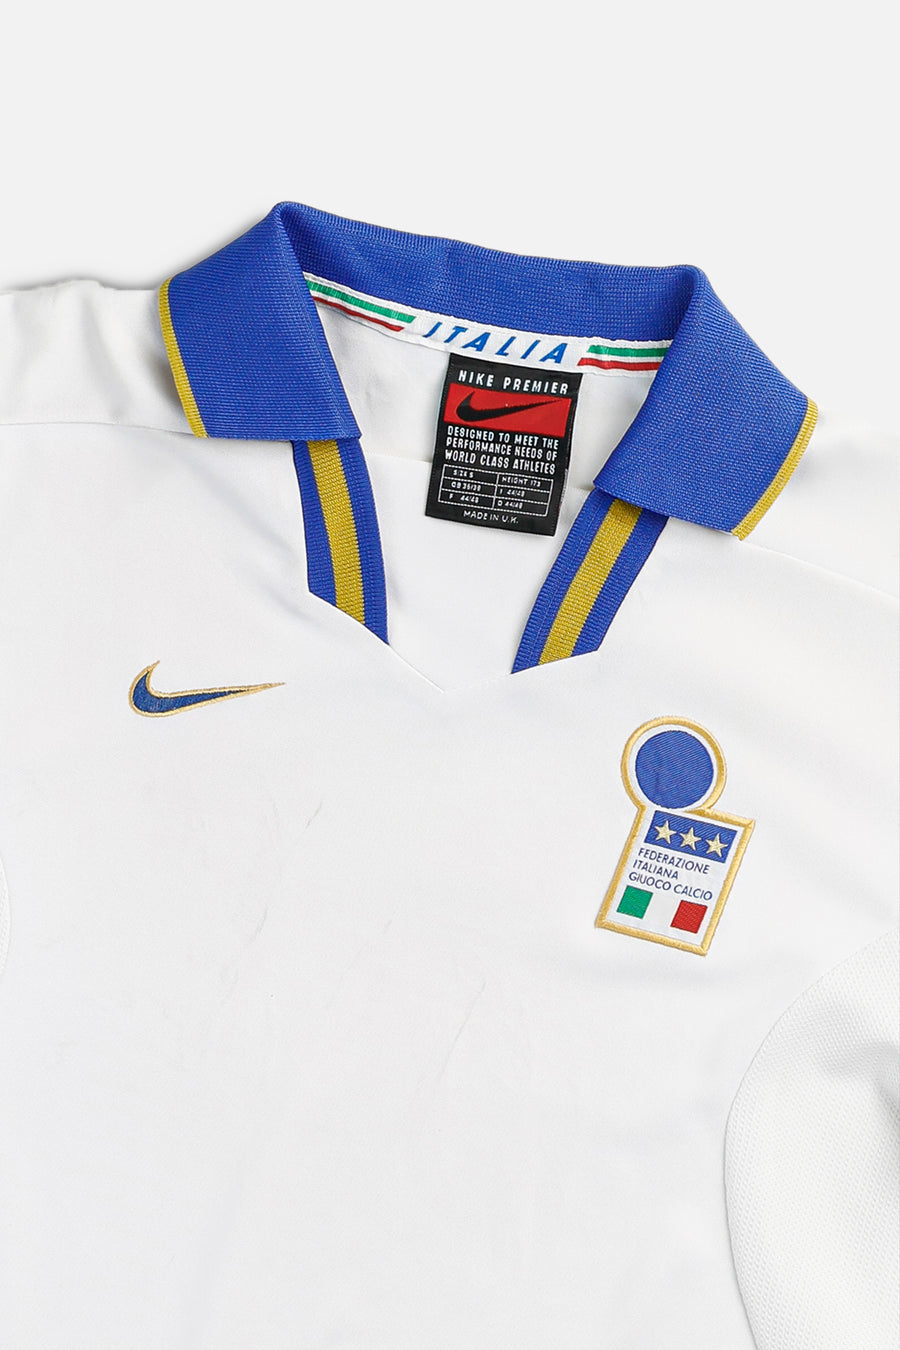 Nike Italy Soccer Jersey - S